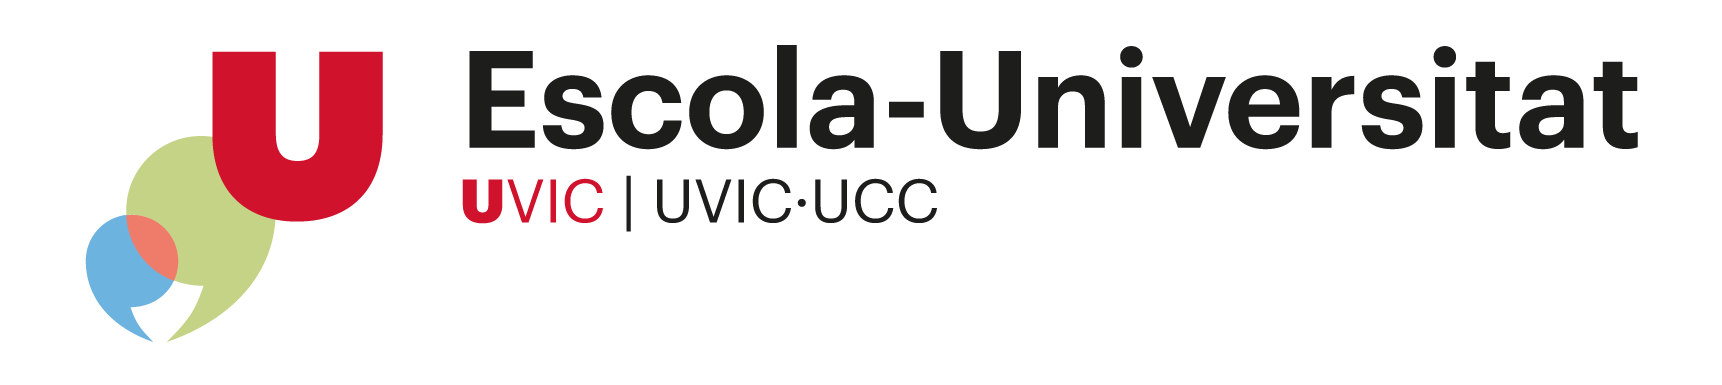 Escola Universitat Logo